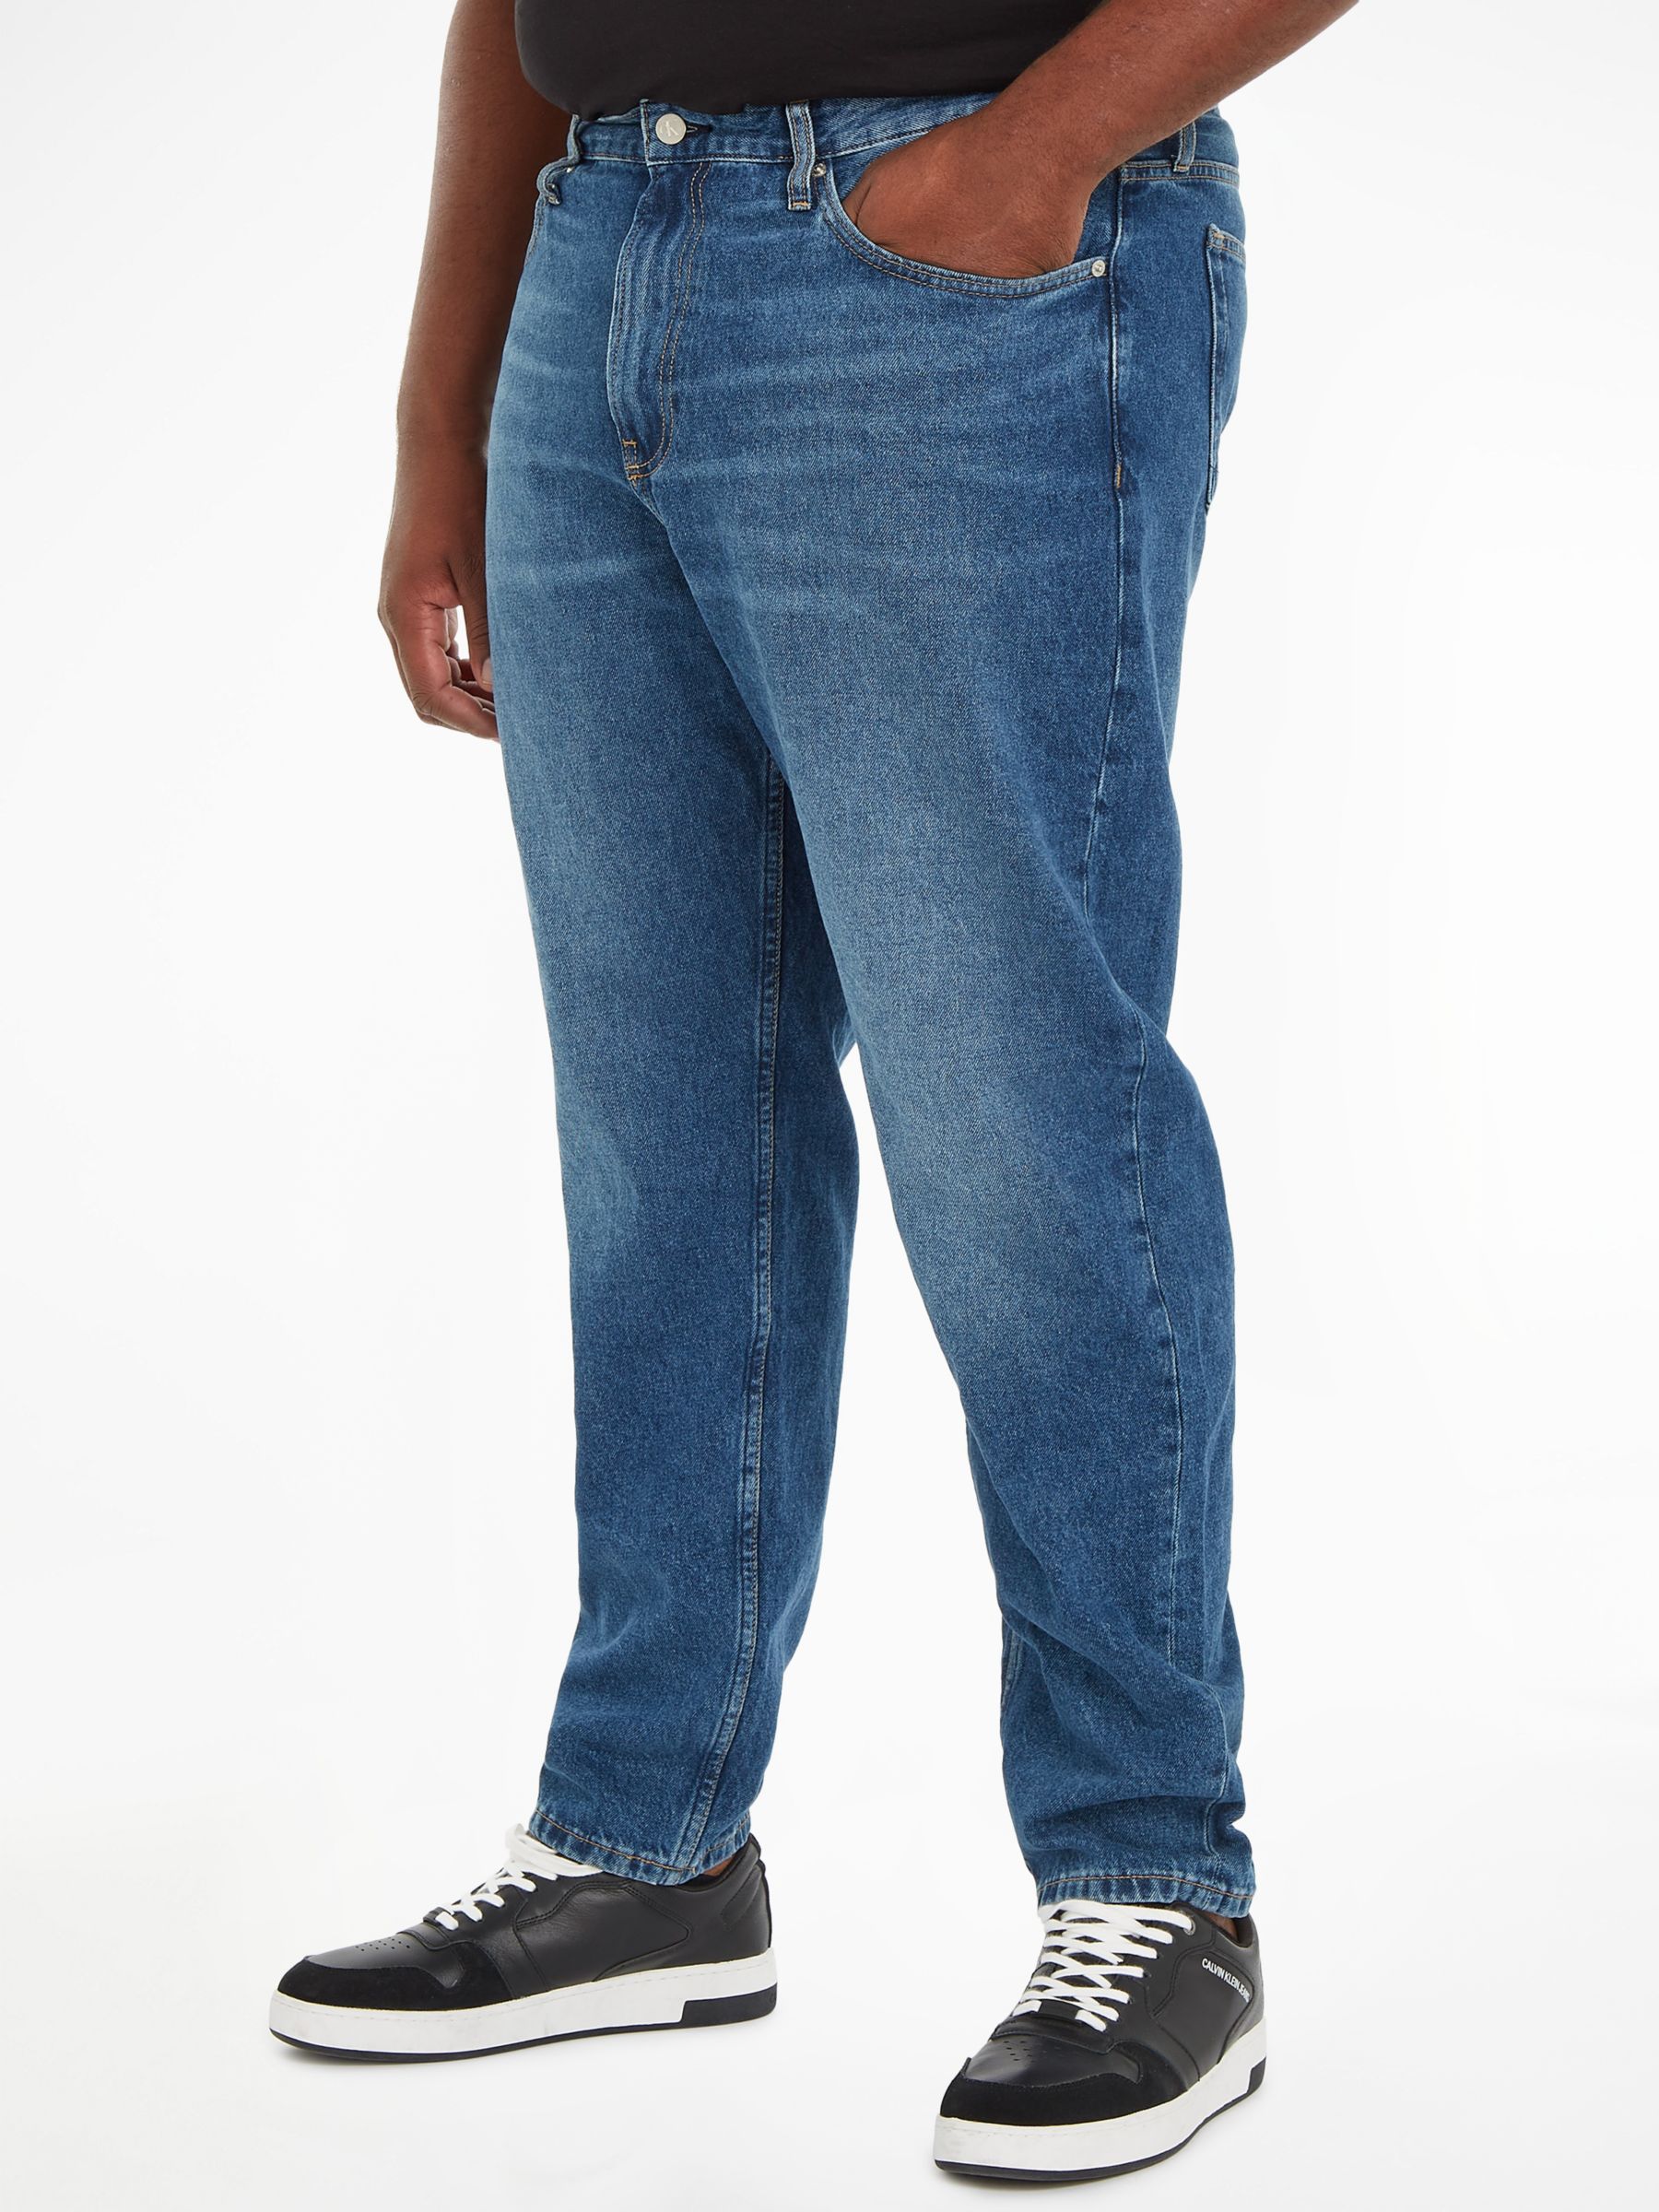 Calvin Klein Jeans Slim Tapered Jeans, Denim Dark, 28R